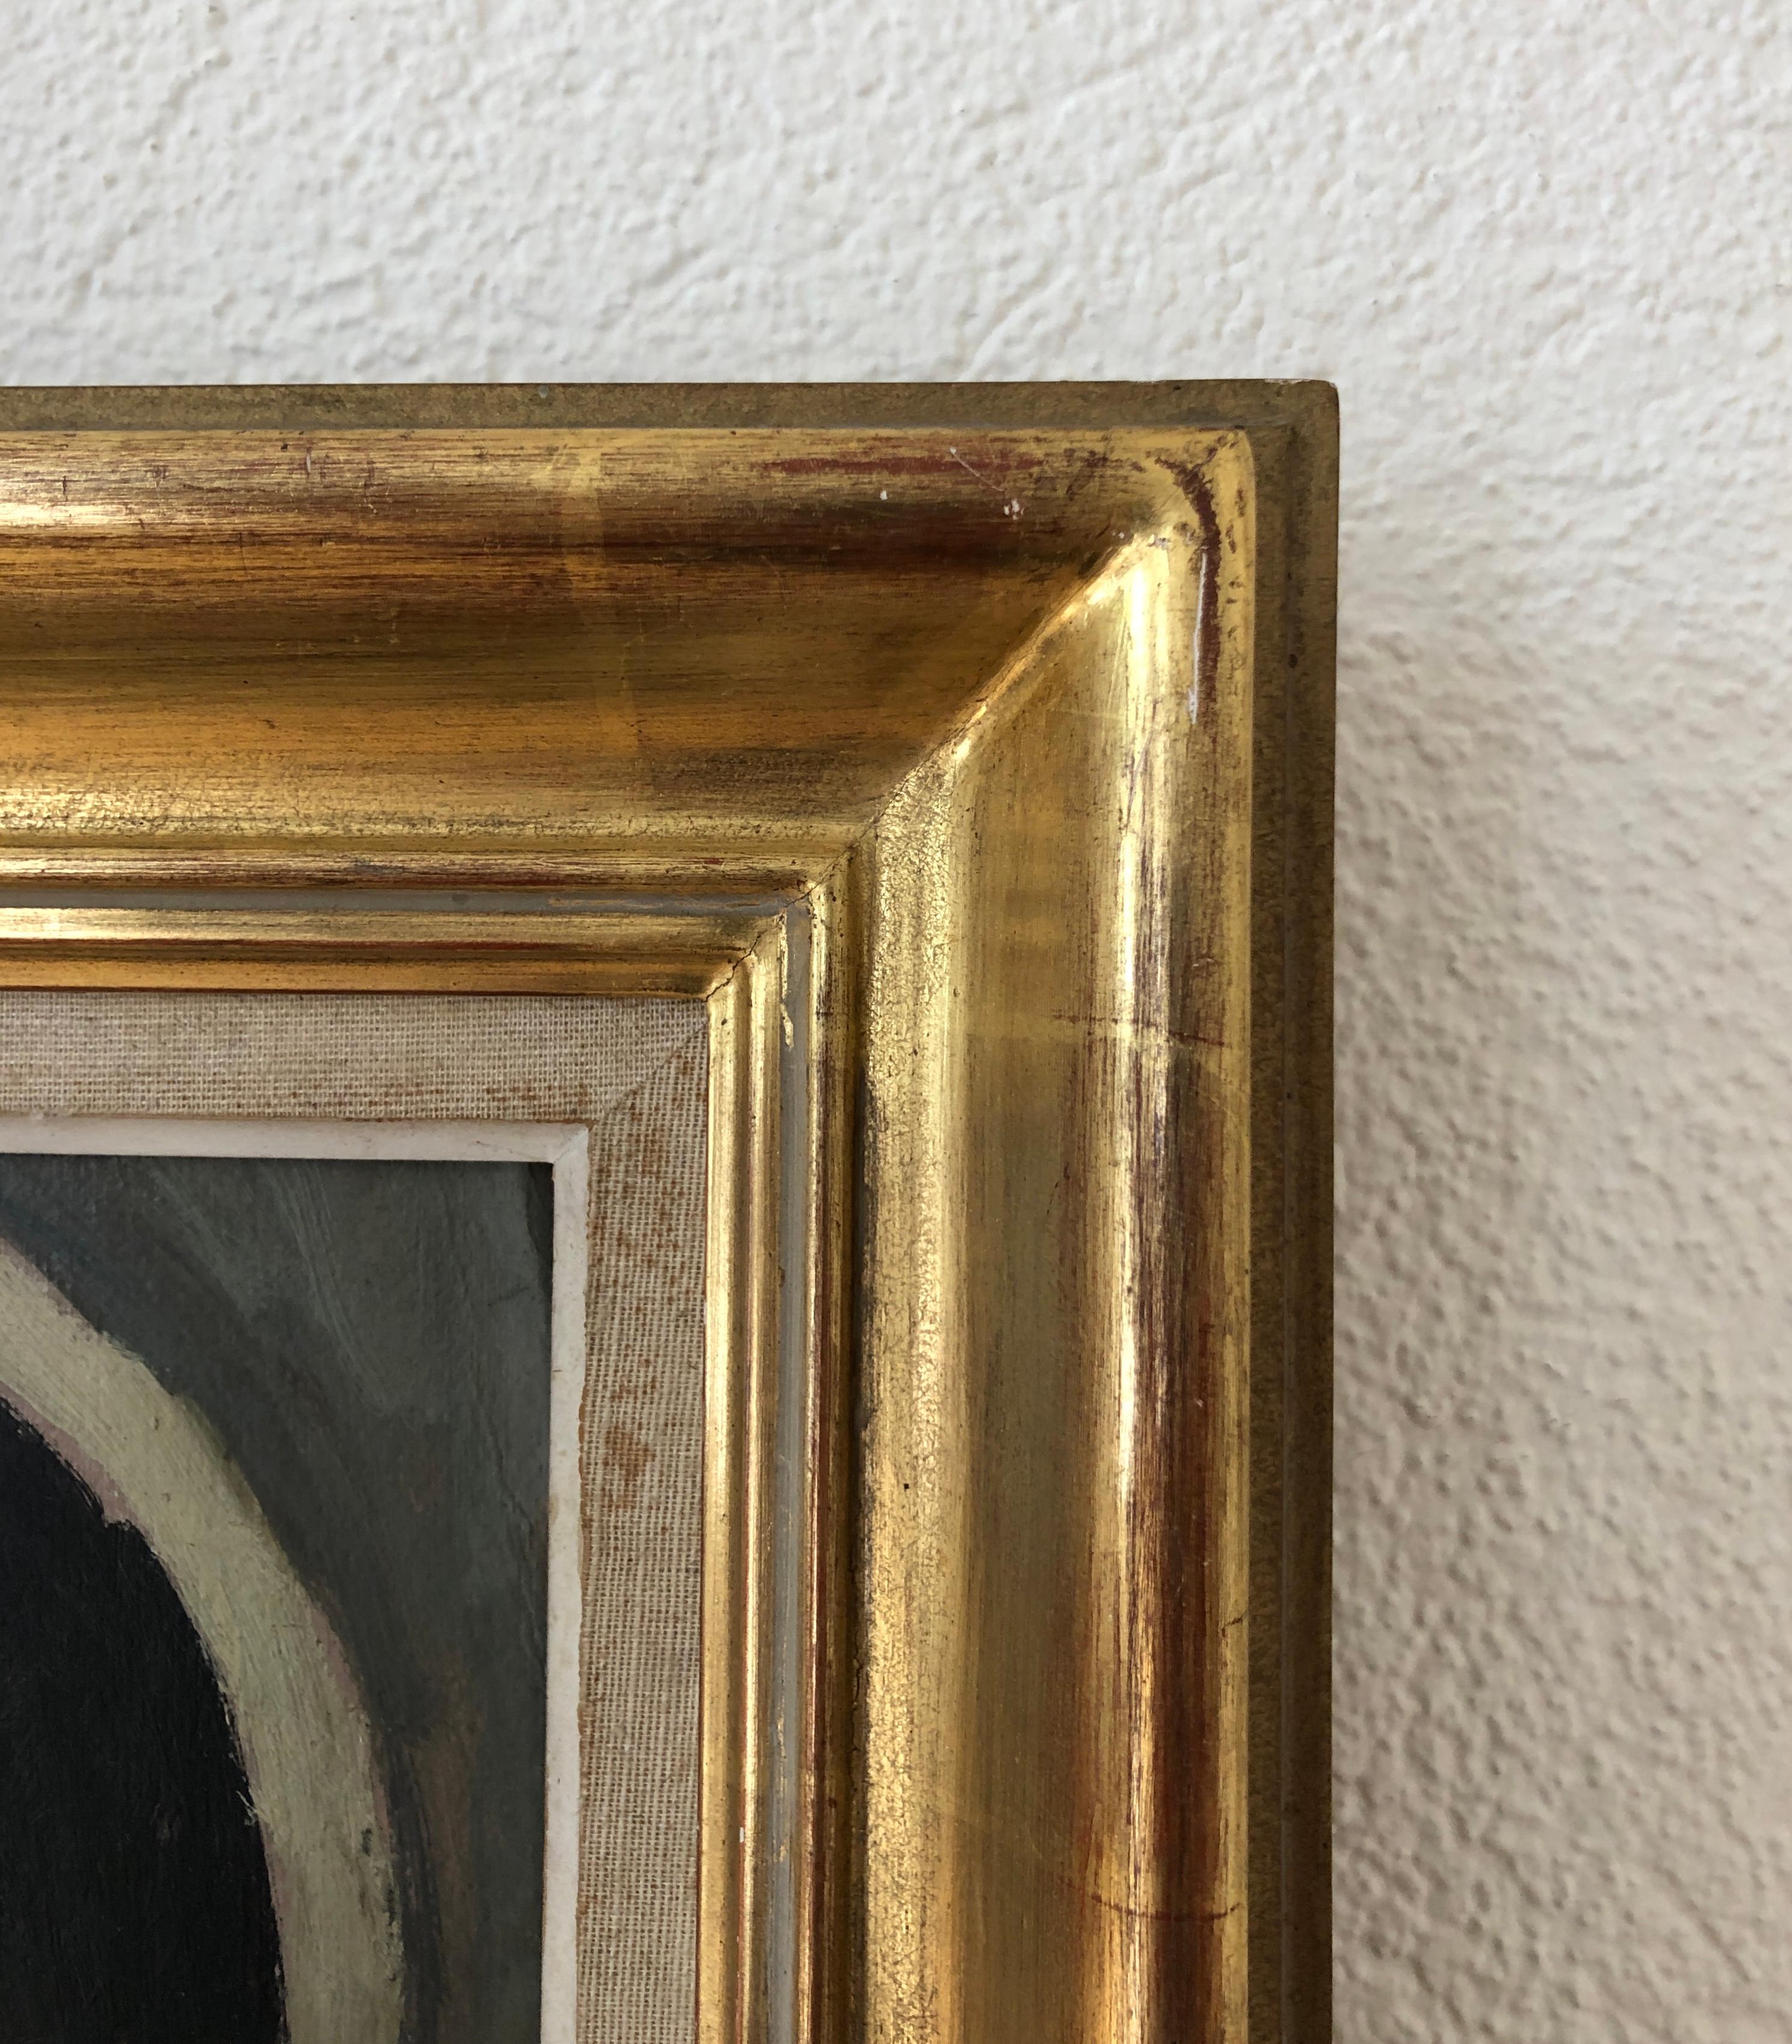 Work on cardboard
Golden wooden frame
48.5 x 39.5 x 4.5 cm